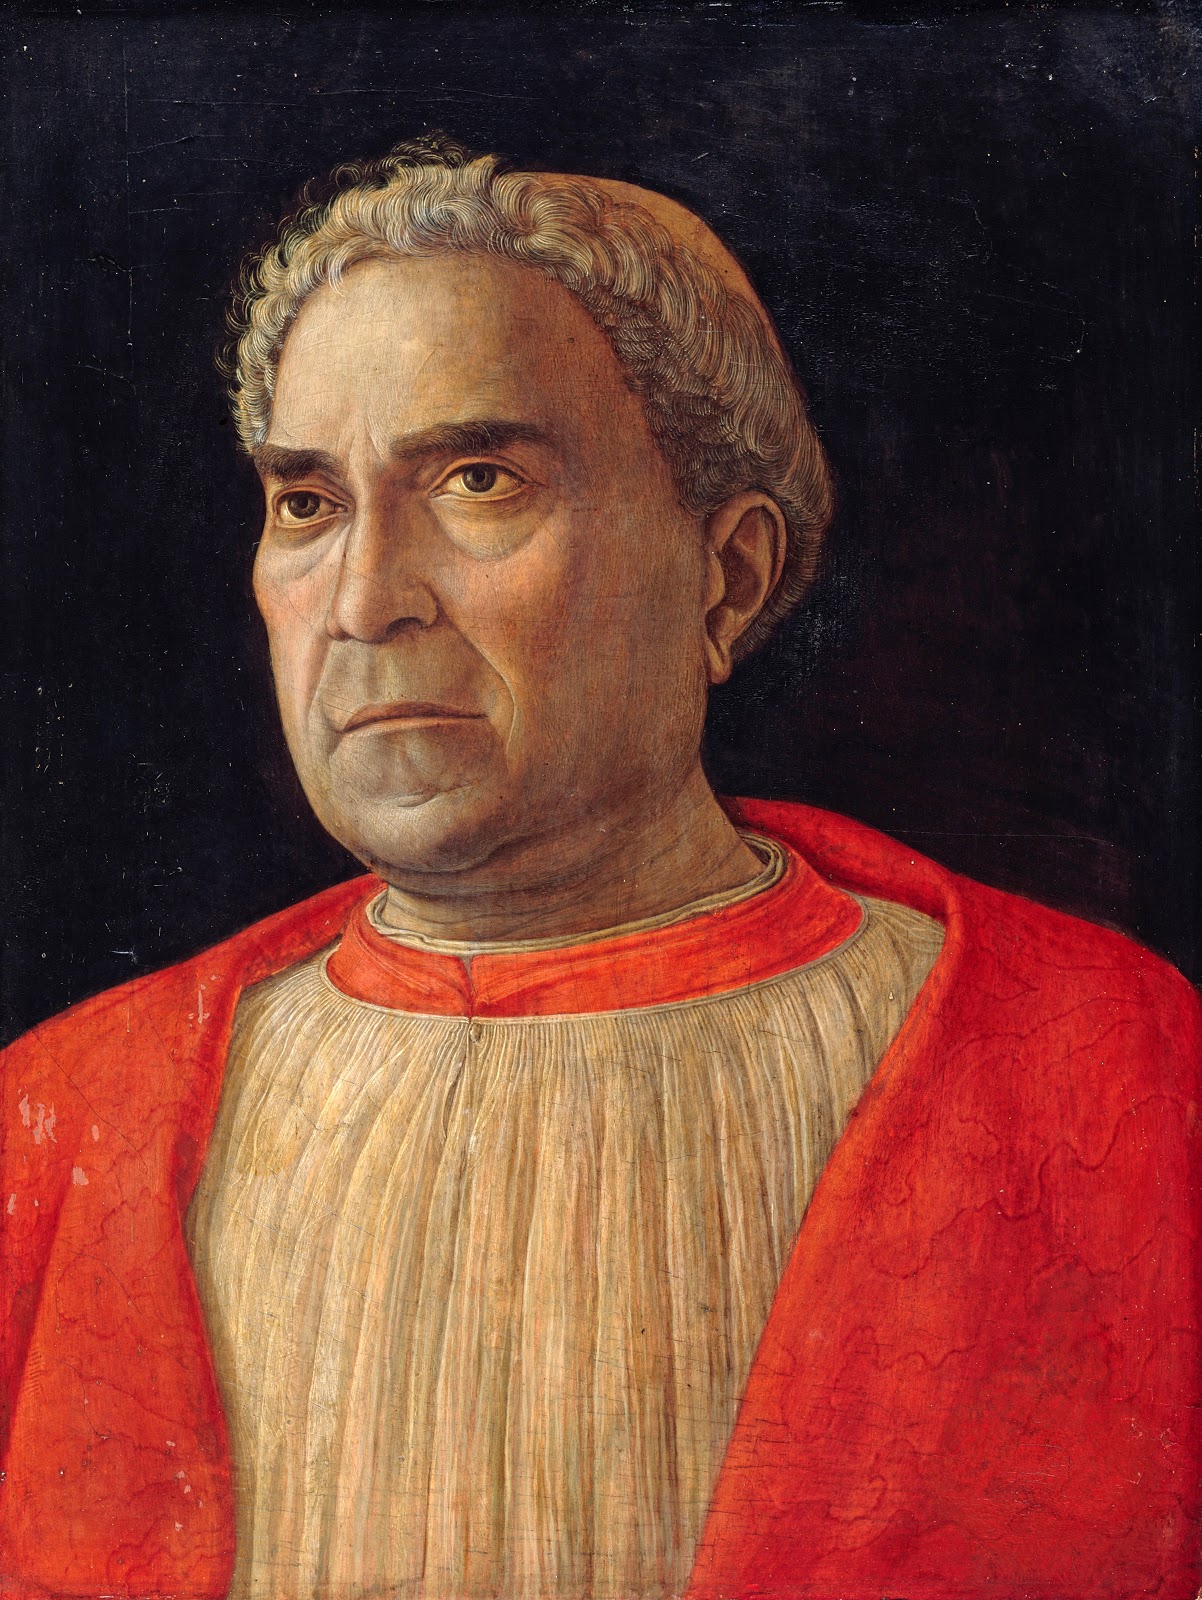 Andrea+Mantegna-1431-1506 (63).jpg